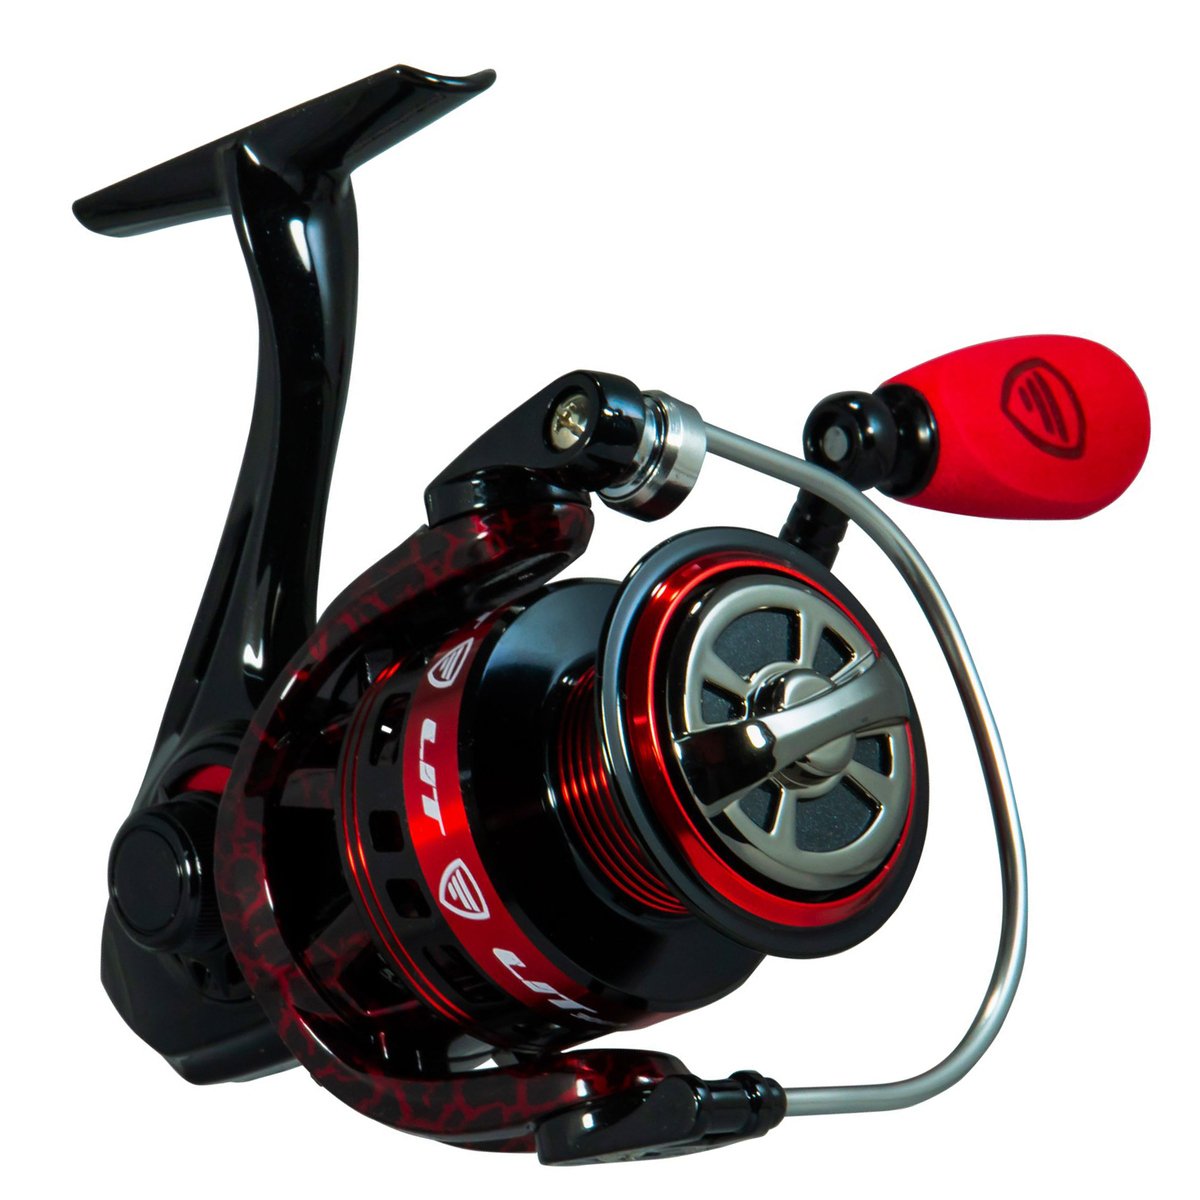 https://www.sportsmans.com/medias/favorite-fishing-usa-lit-spinning-reel-3000-1562128-1.jpg?context=bWFzdGVyfGltYWdlc3w1NzUwNTV8aW1hZ2UvanBlZ3xhR0V6TDJnM1ppOHhNREU0TVRBMk5UQTRNRGcyTWk4eE5UWXlNVEk0TFRGZlltRnpaUzFqYjI1MlpYSnphVzl1Um05eWJXRjBYekV5TURBdFkyOXVkbVZ5YzJsdmJrWnZjbTFoZEF8MzlmNmY1Mzg5MjRjNTllMzdjMWNiZTEwZjdlZWU1ZTIwYTUyMGQxNGJiM2FjNTk0Y2M5ZjkxZTA4OTAxMDg0ZQ